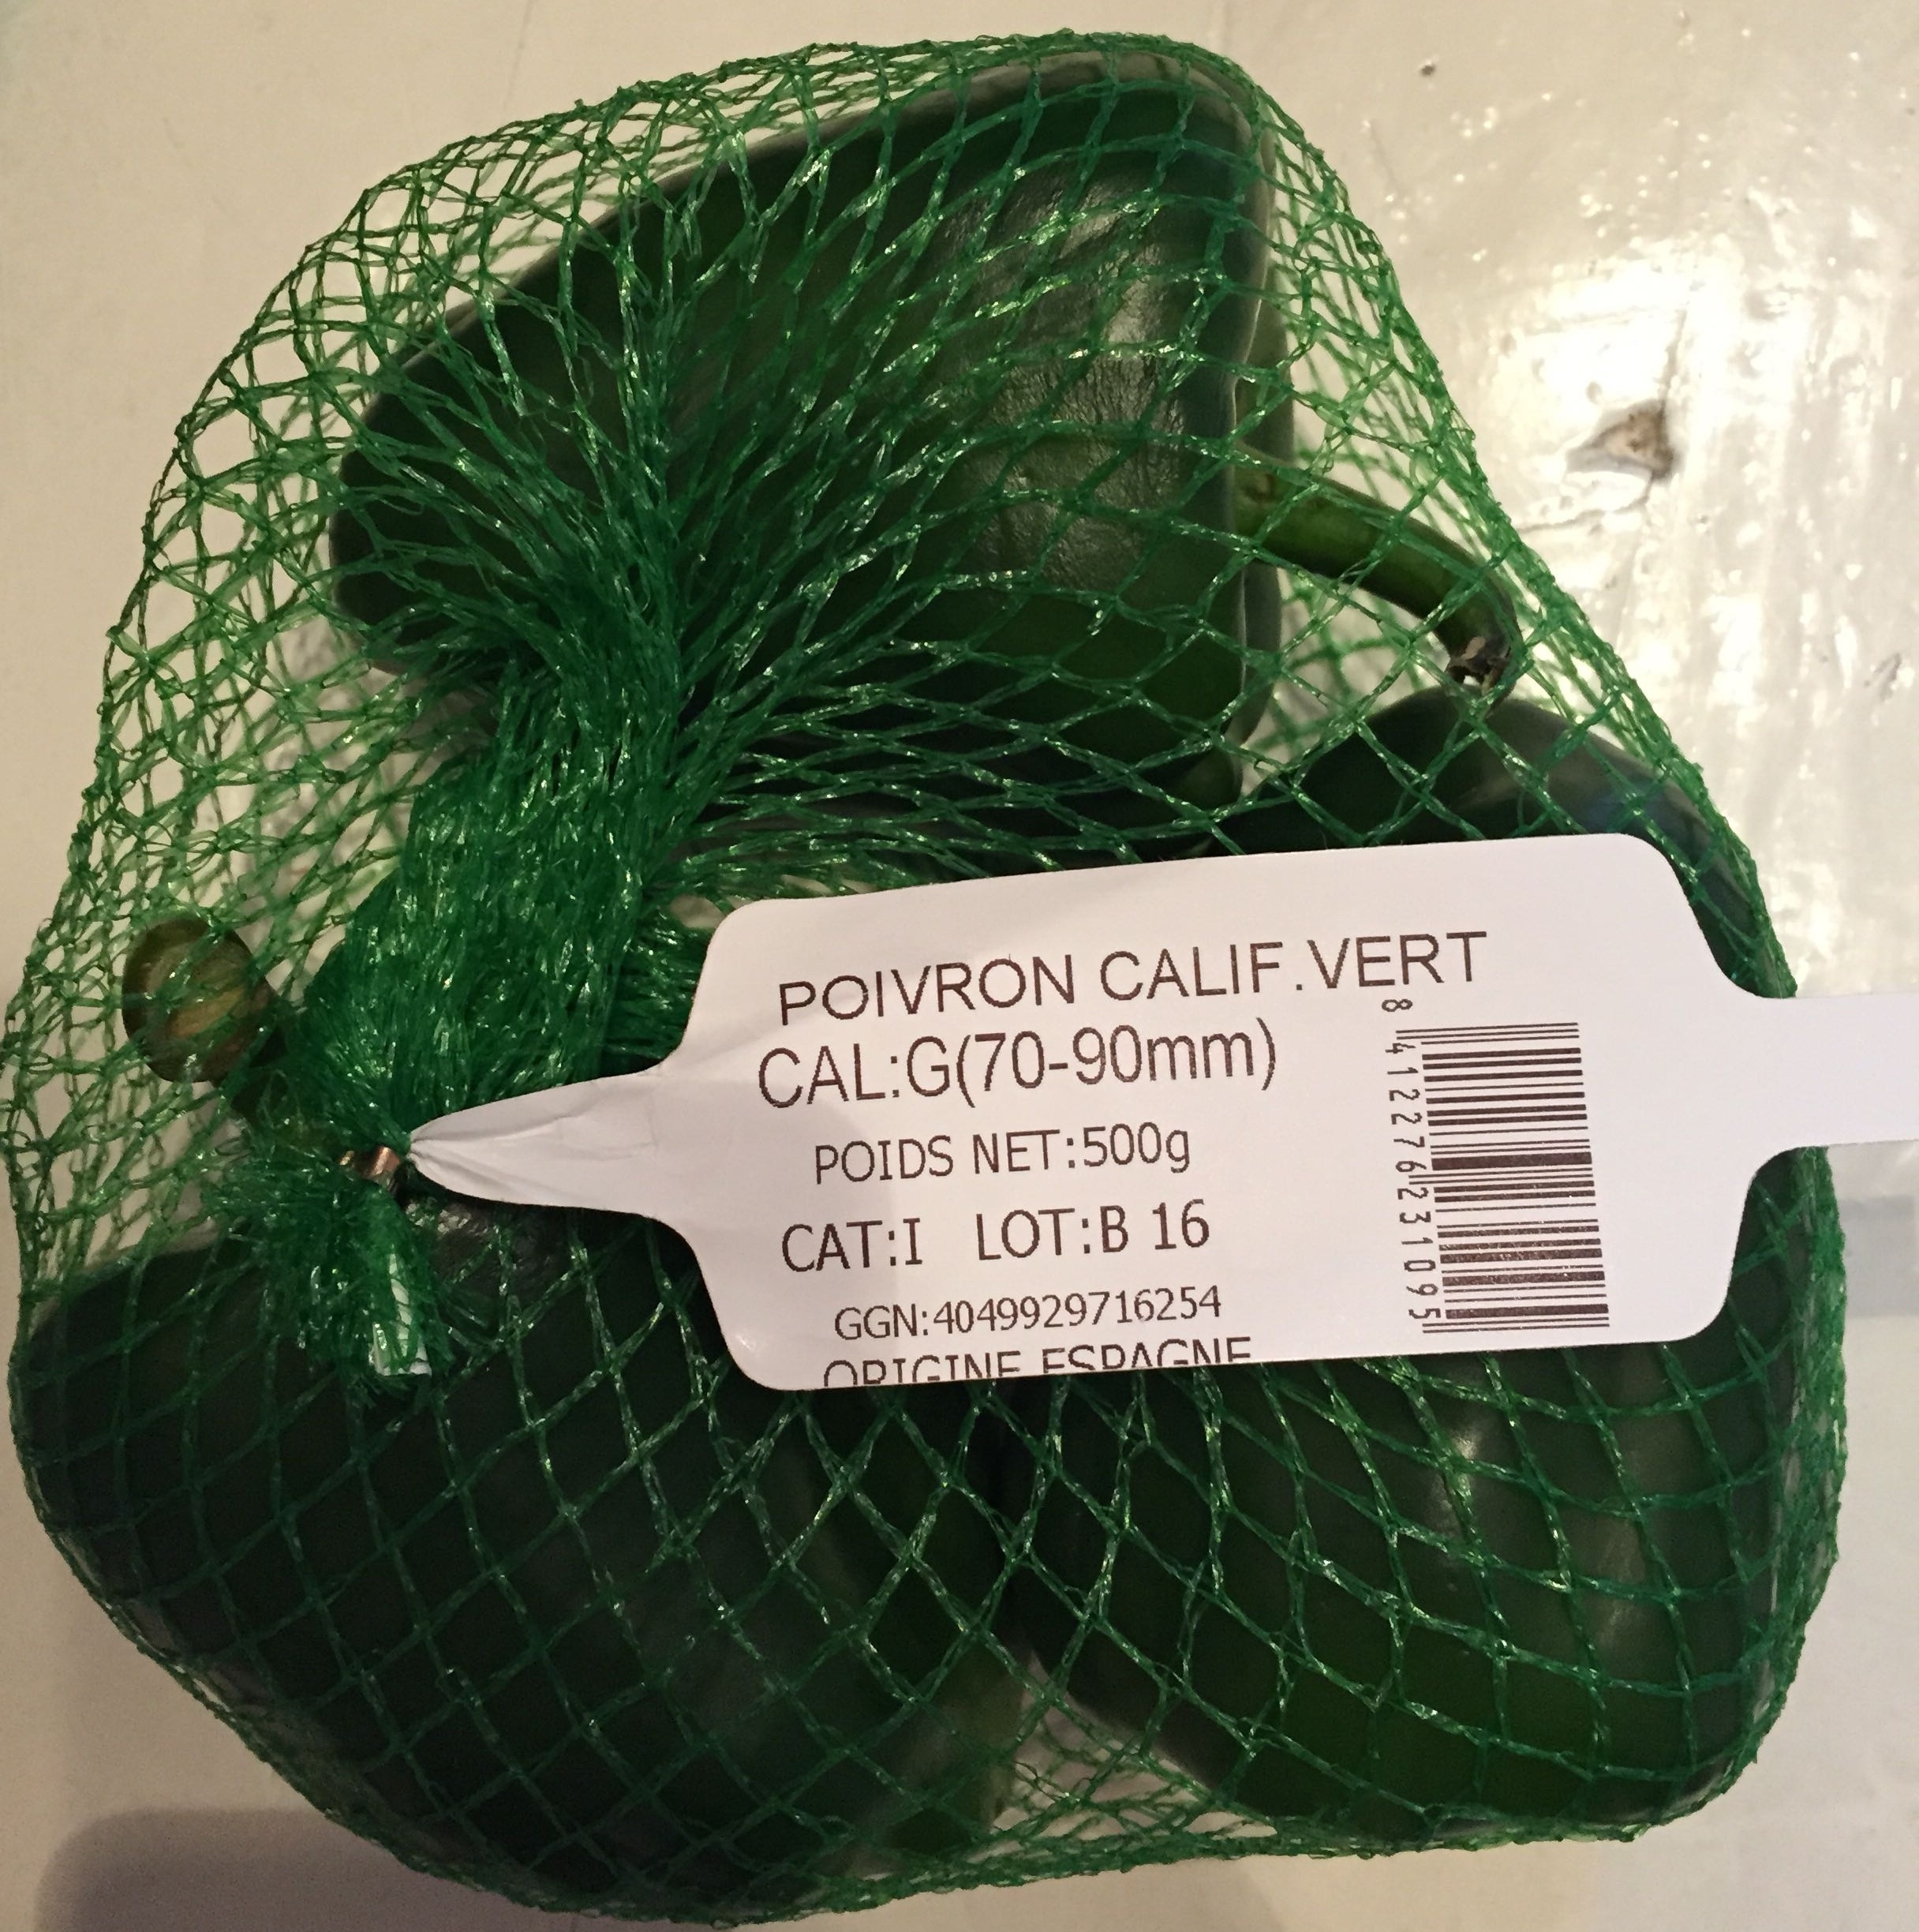 Poivron Calif Vert Cat. 1 - Product - fr